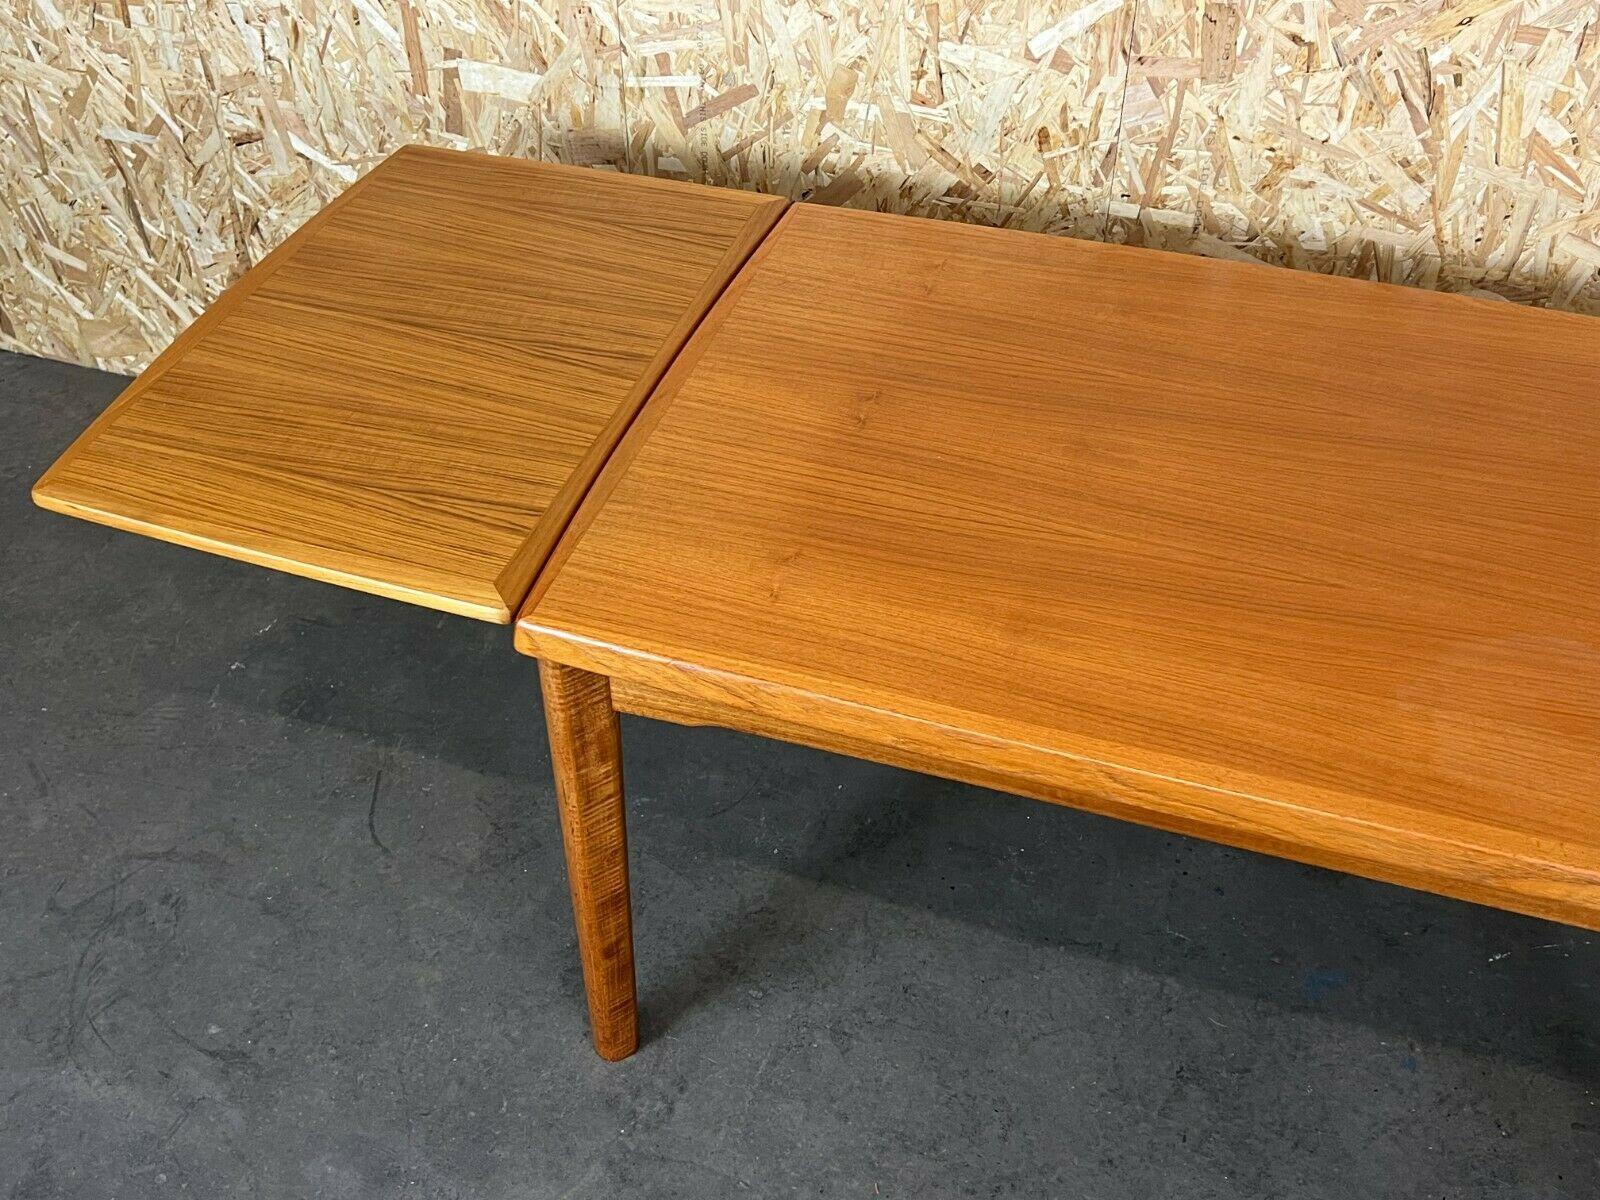 60s 70s Teak Coffee Table Danish Modern Design Denmark 60s For Sale 3